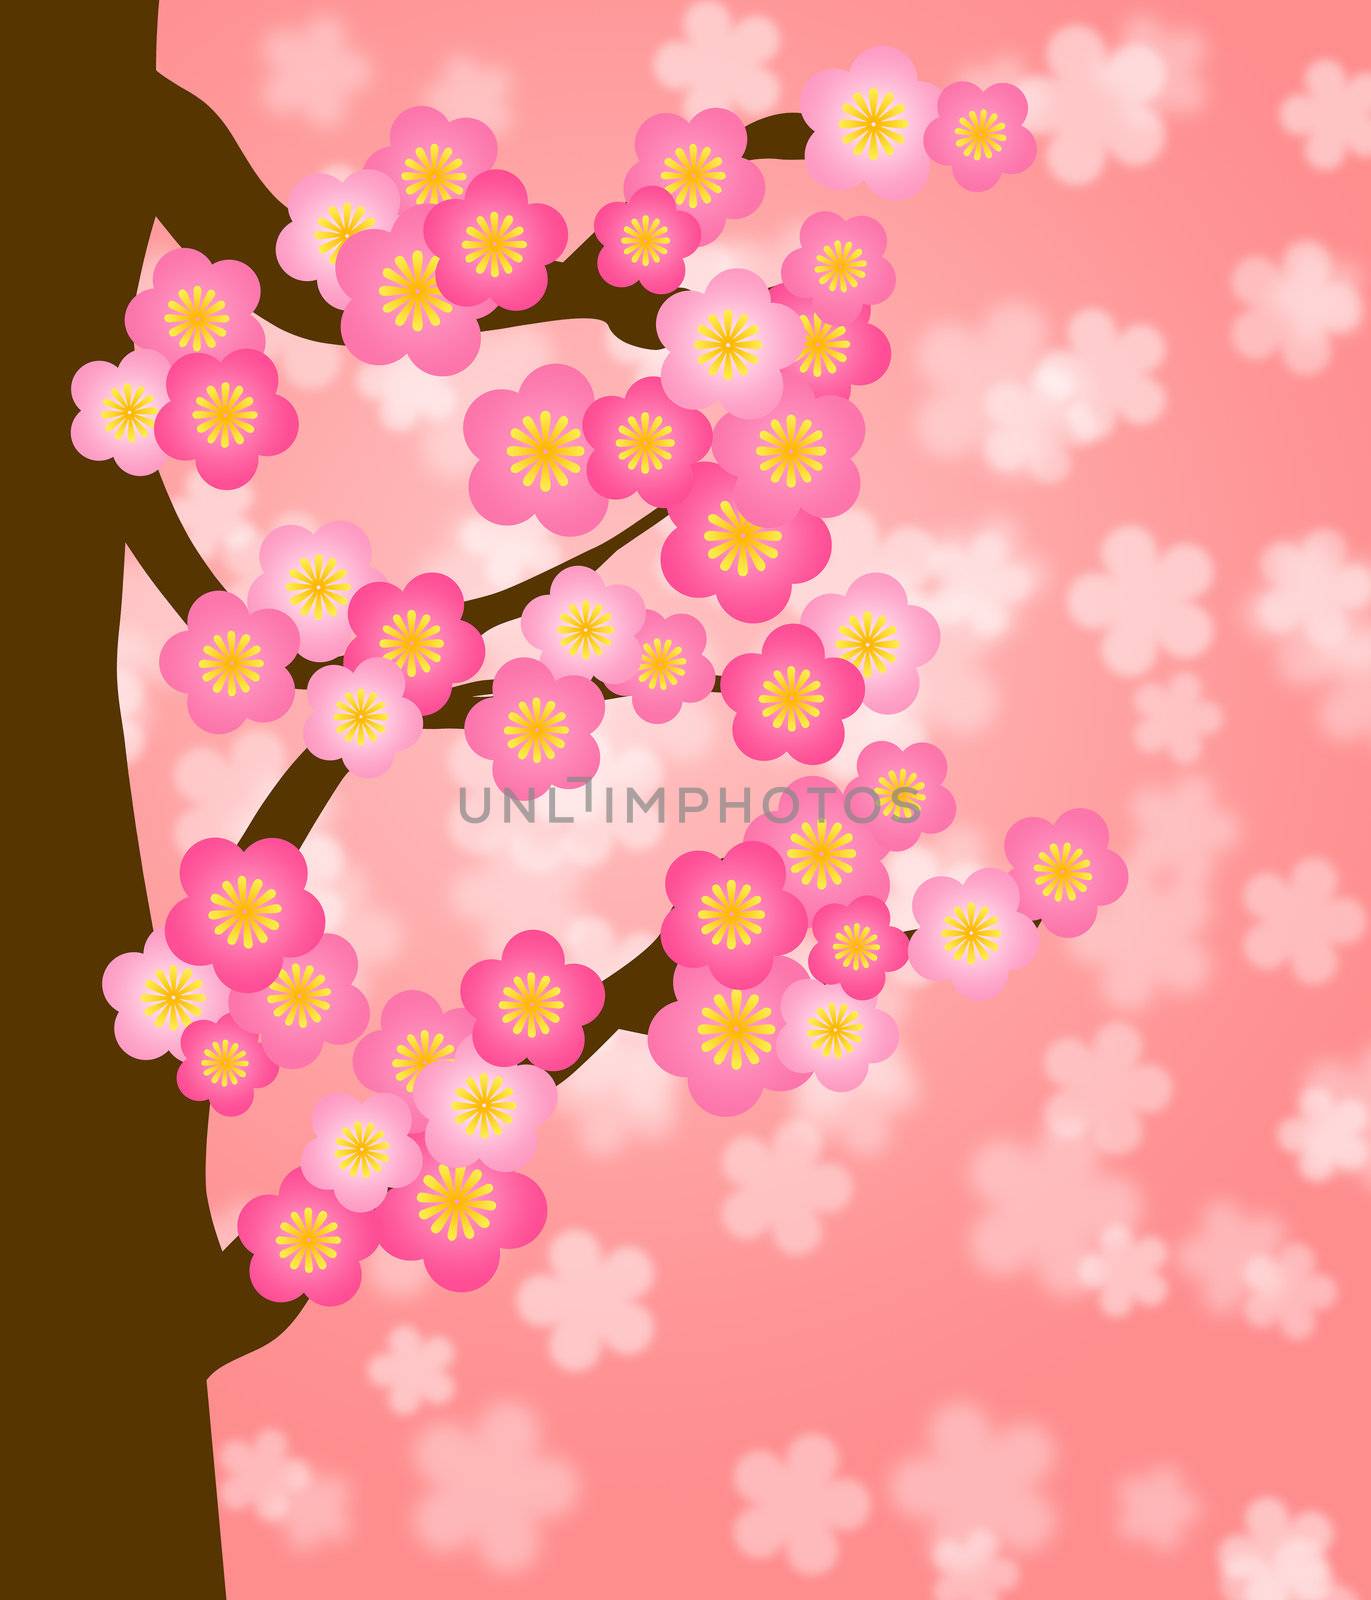 Flowering Cherry Blossom Tree in Spring by jpldesigns